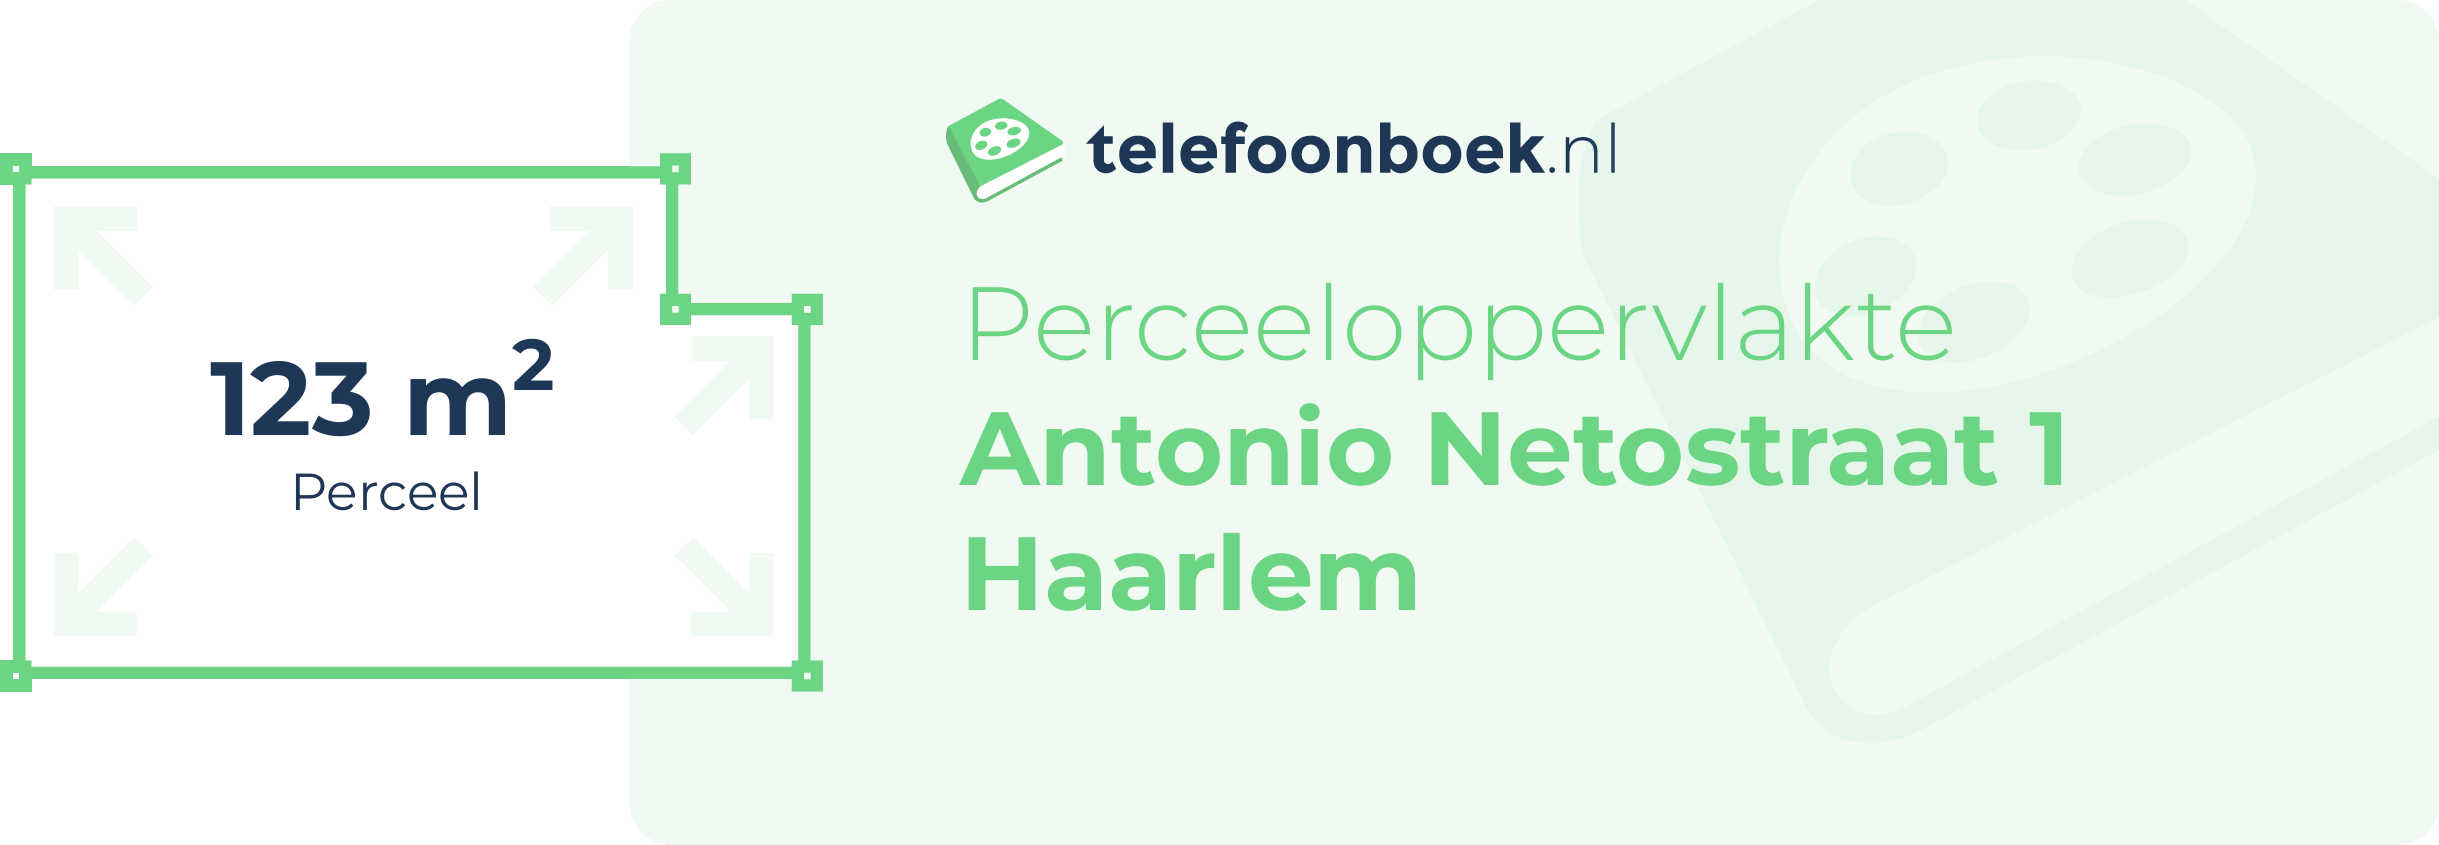 Perceeloppervlakte Antonio Netostraat 1 Haarlem